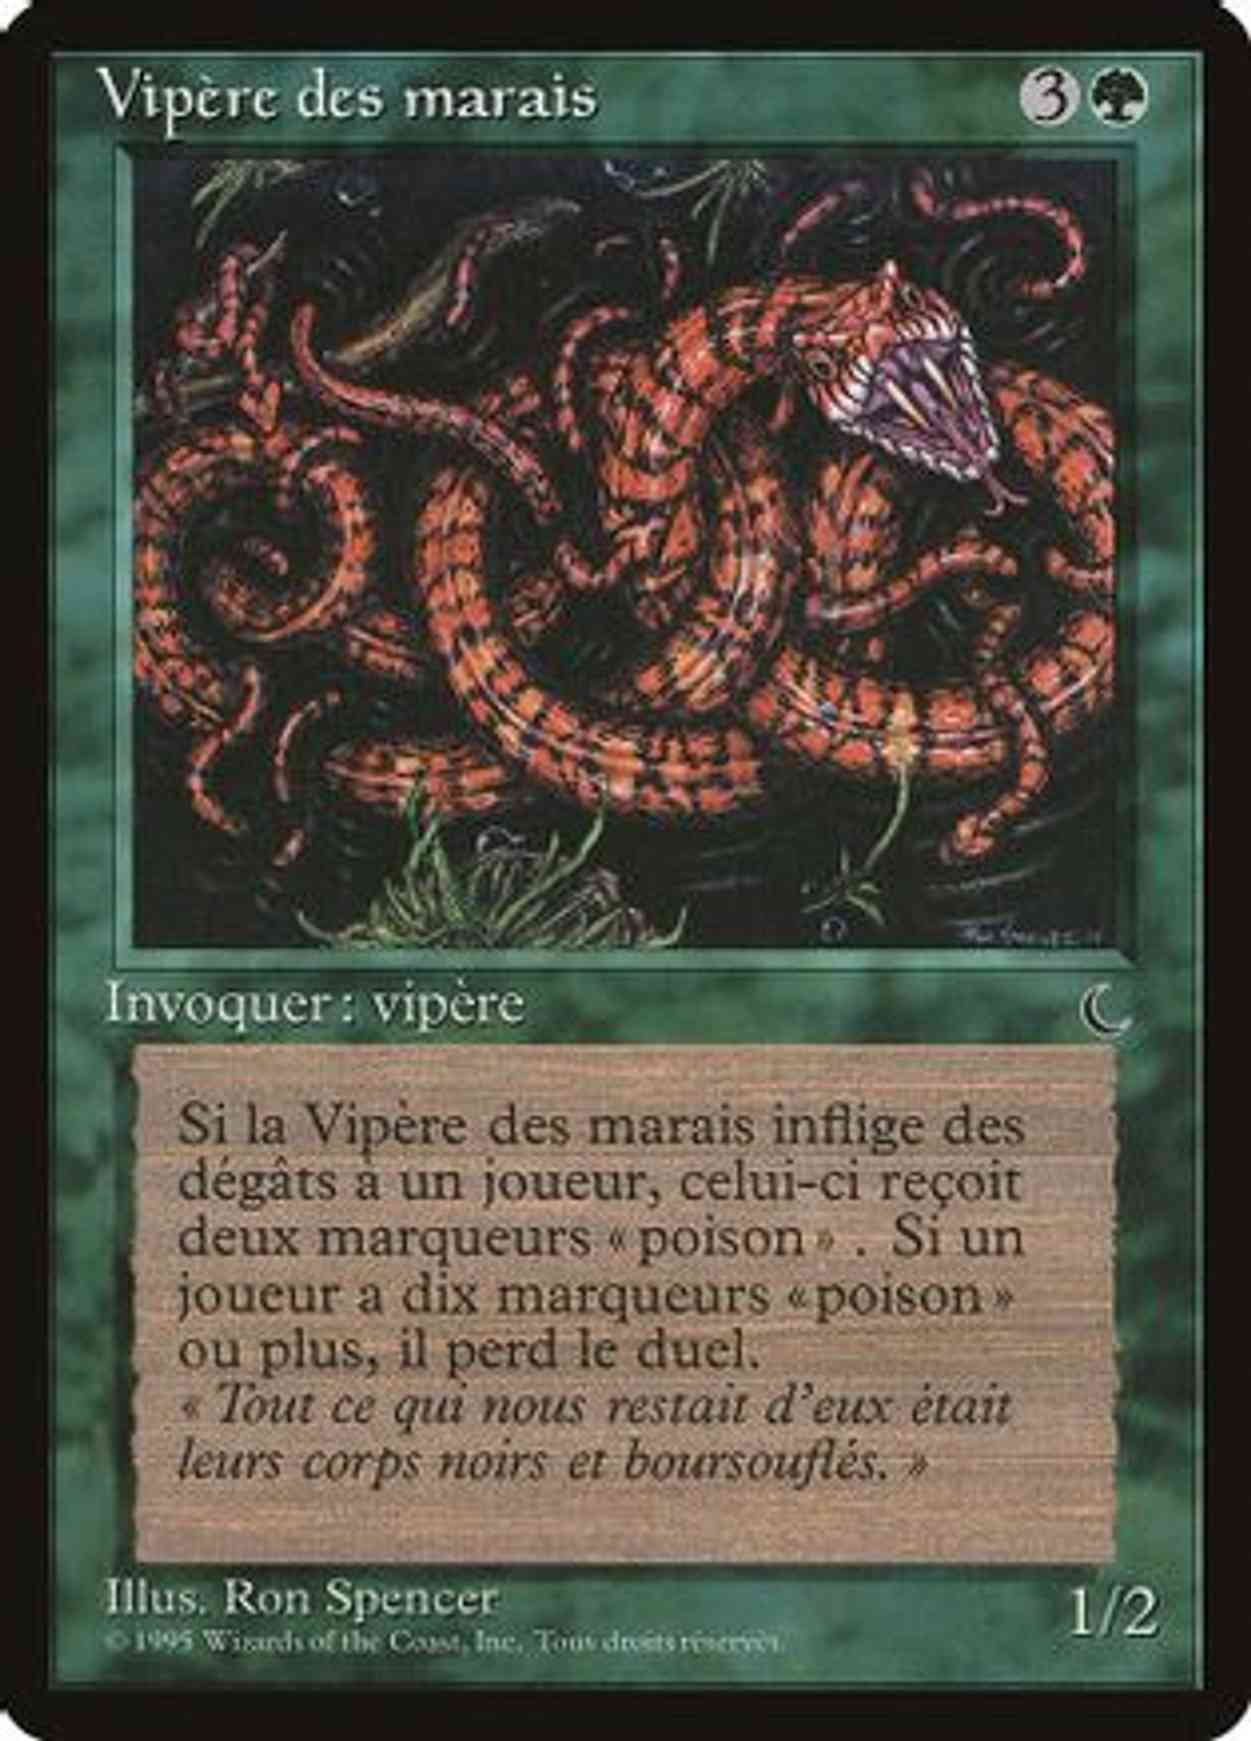 Marsh Viper (French) - "Vipere des marais" magic card front